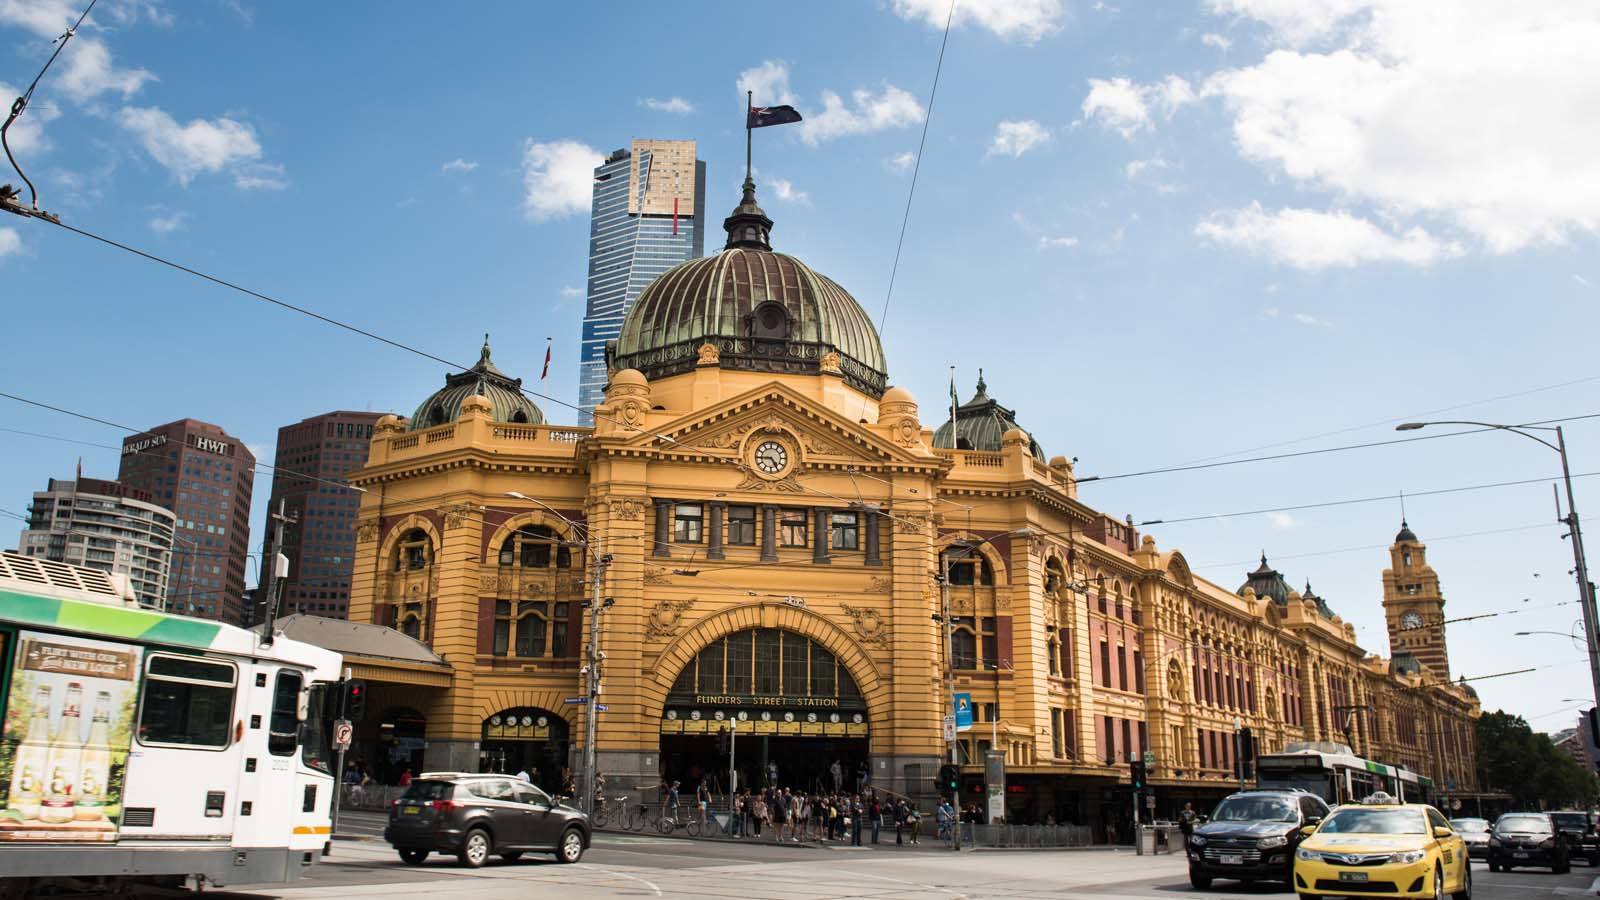 Flinders Street Station, Melbourne, Victoria, Australia